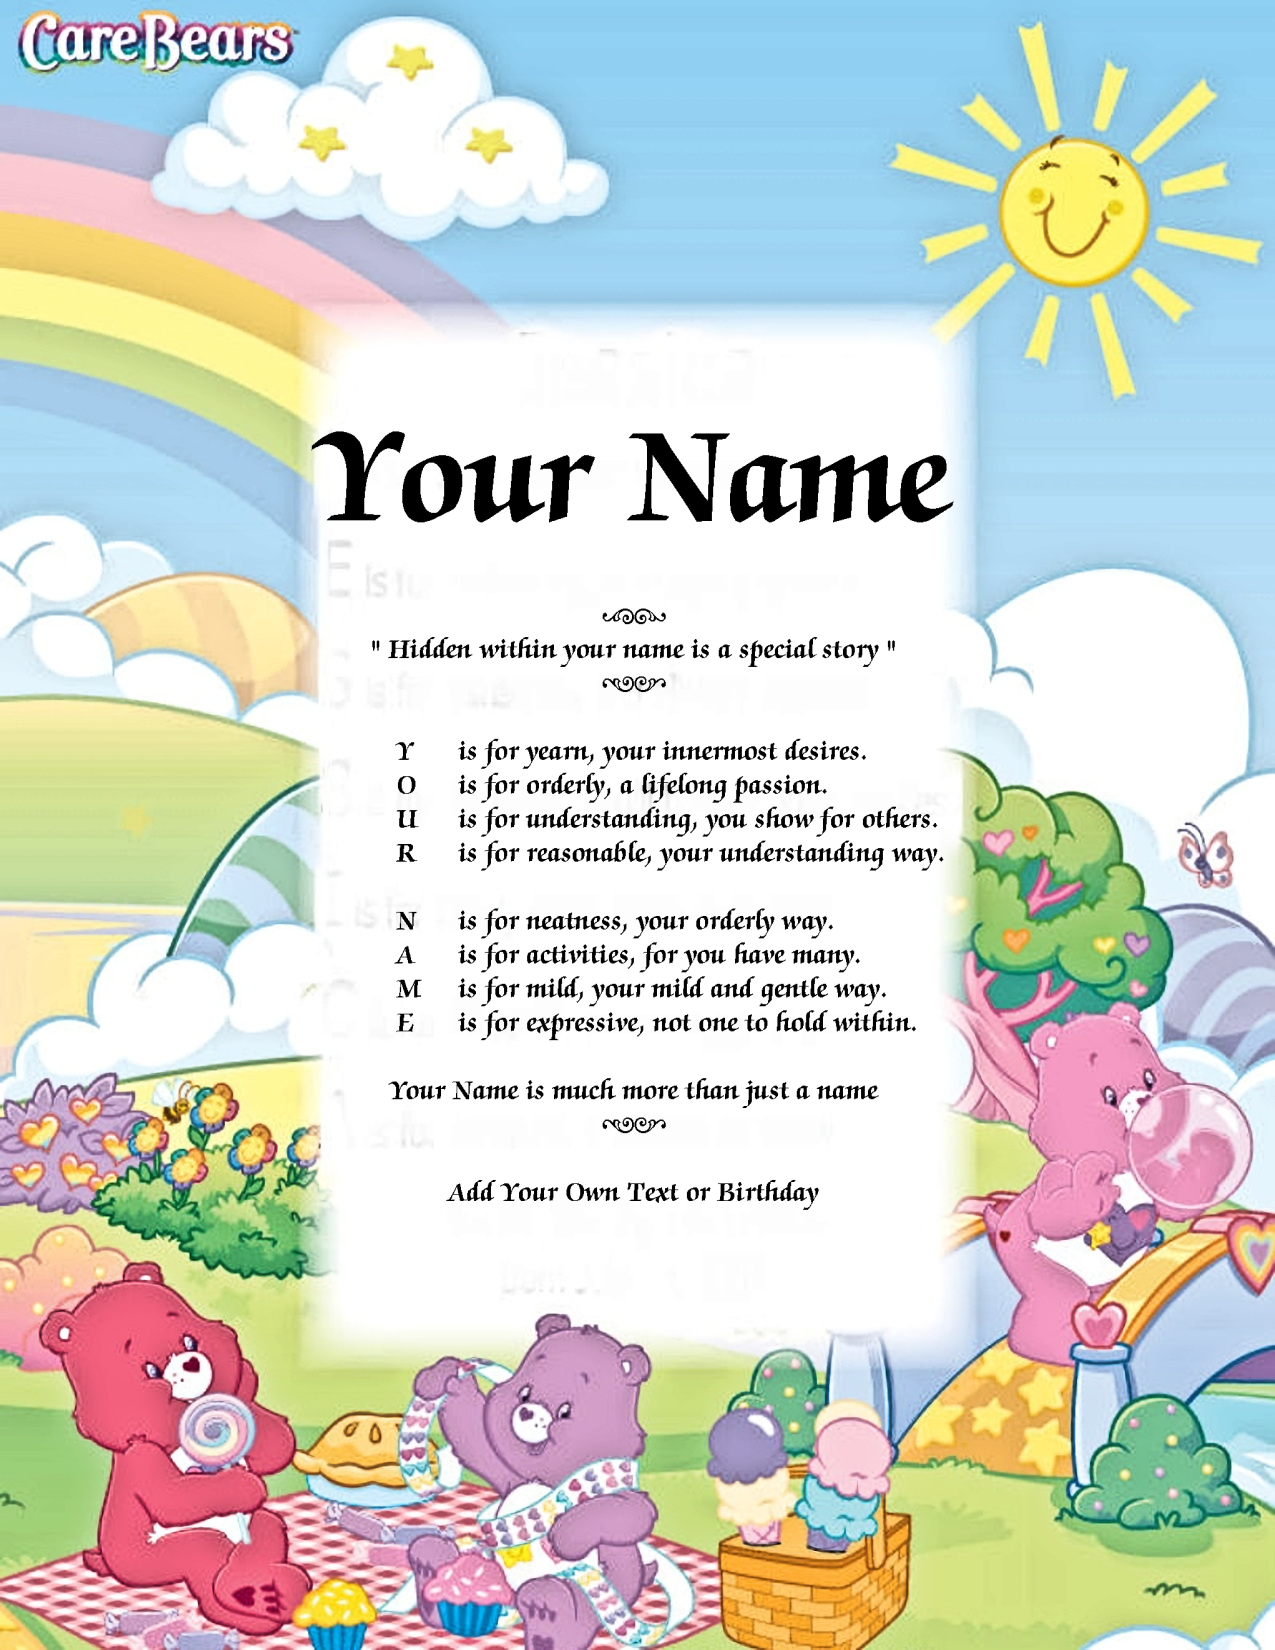 Care Bears Picnic Name Poem Story PDF Version